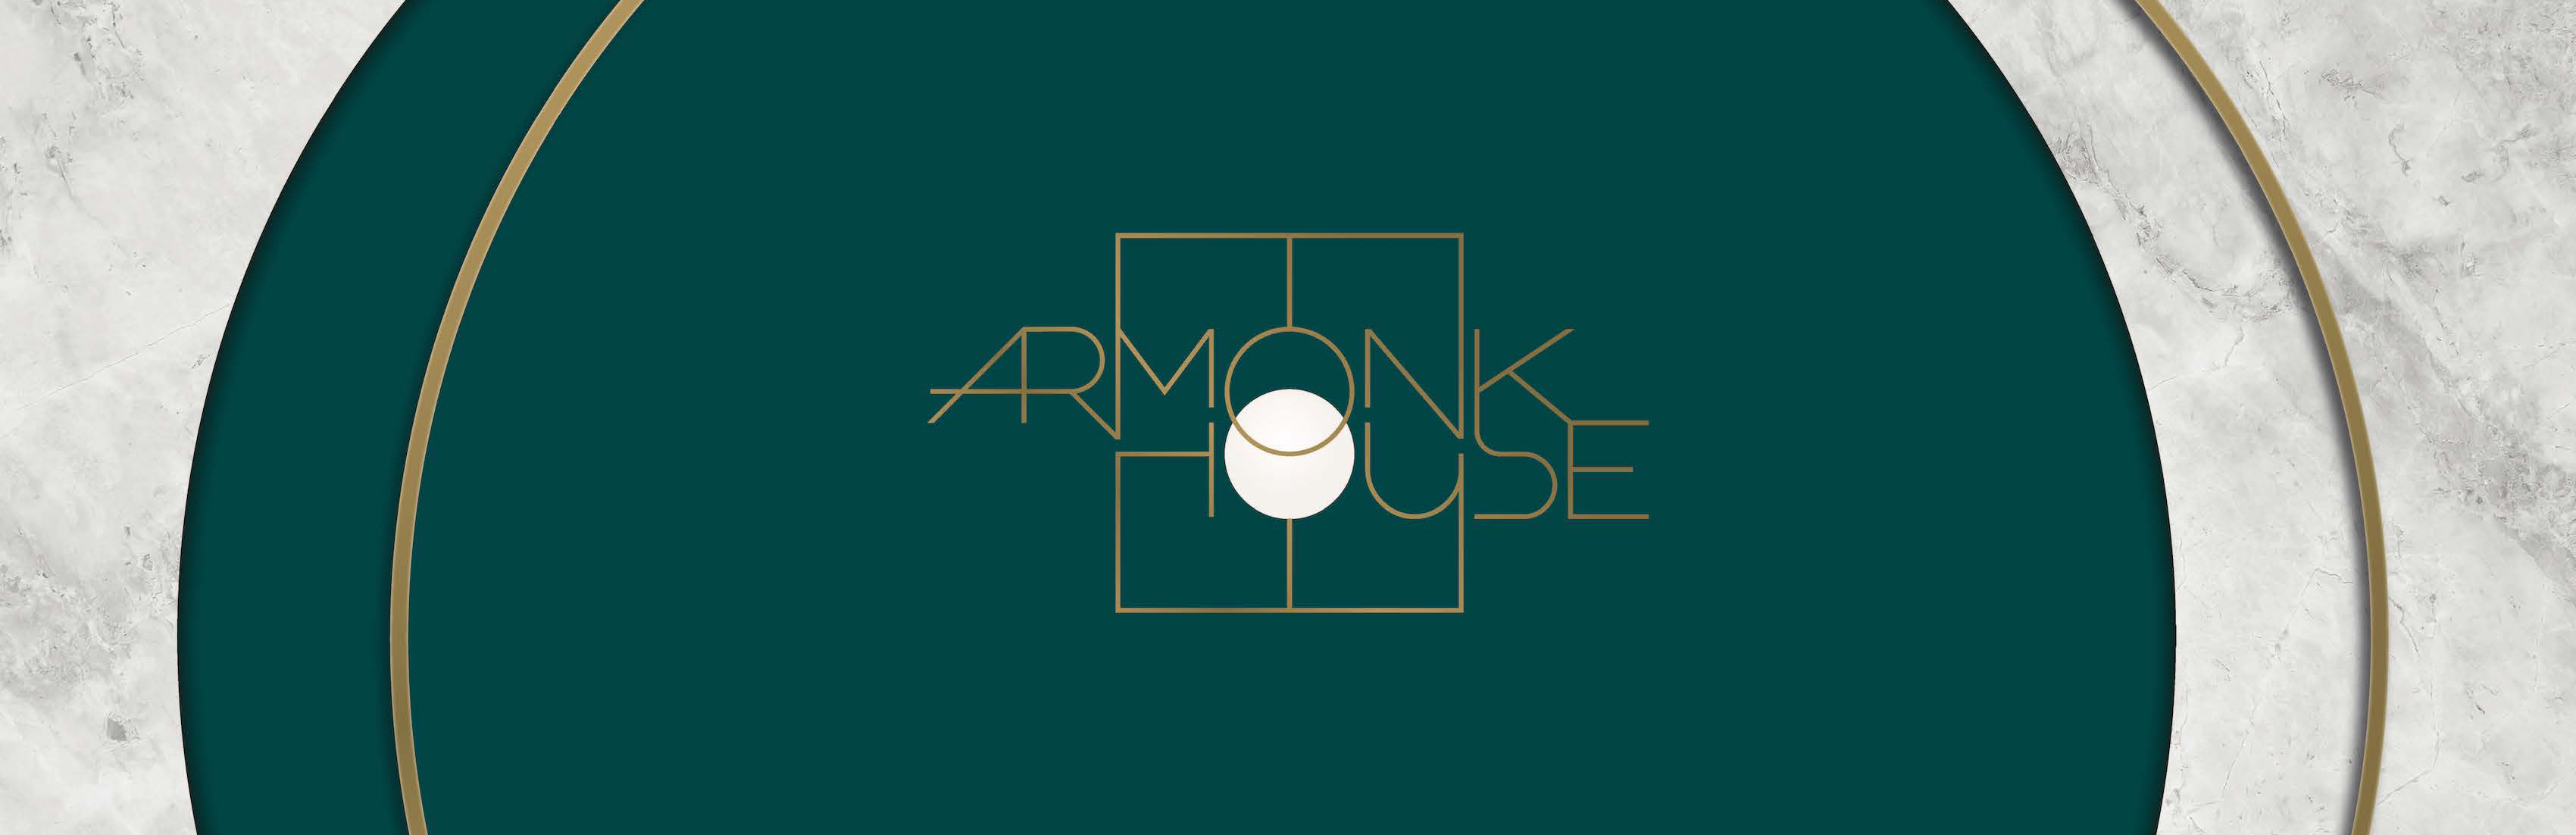 Armonk House